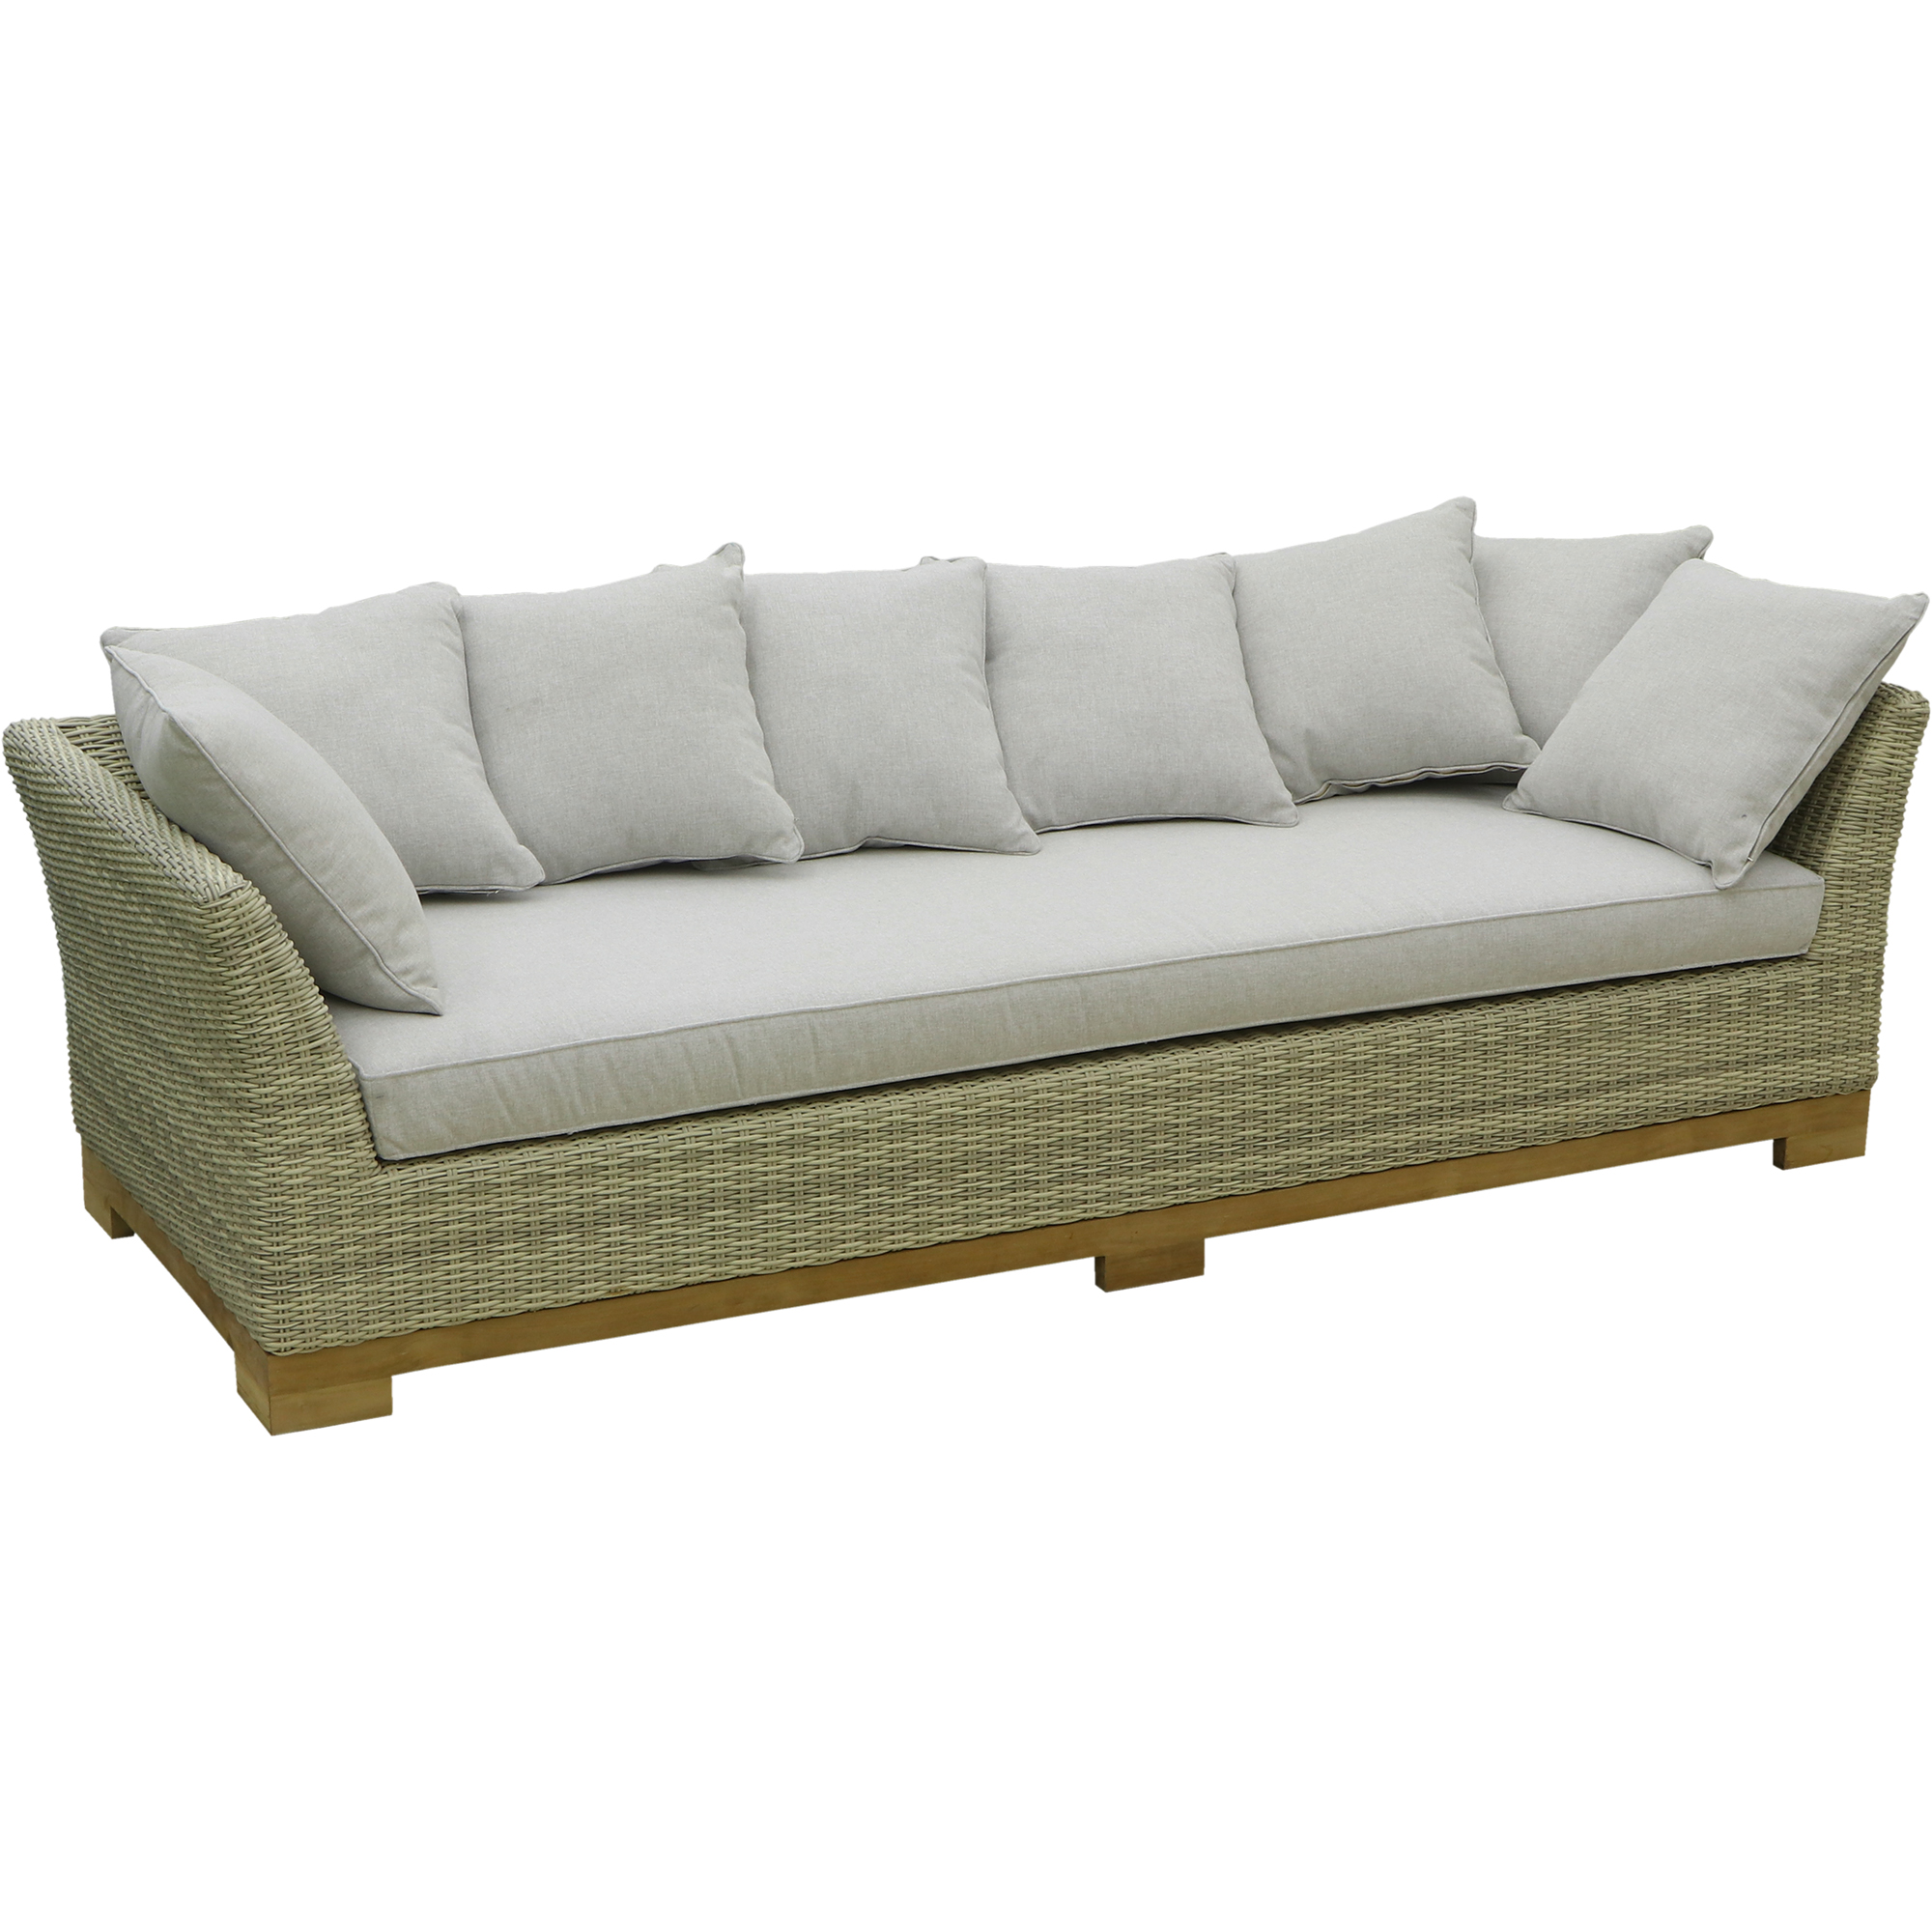 Комплект мебели с подушками Jepara 2 предмета, цвет светло-коричневый, размер 240х90х88 см - фото 2